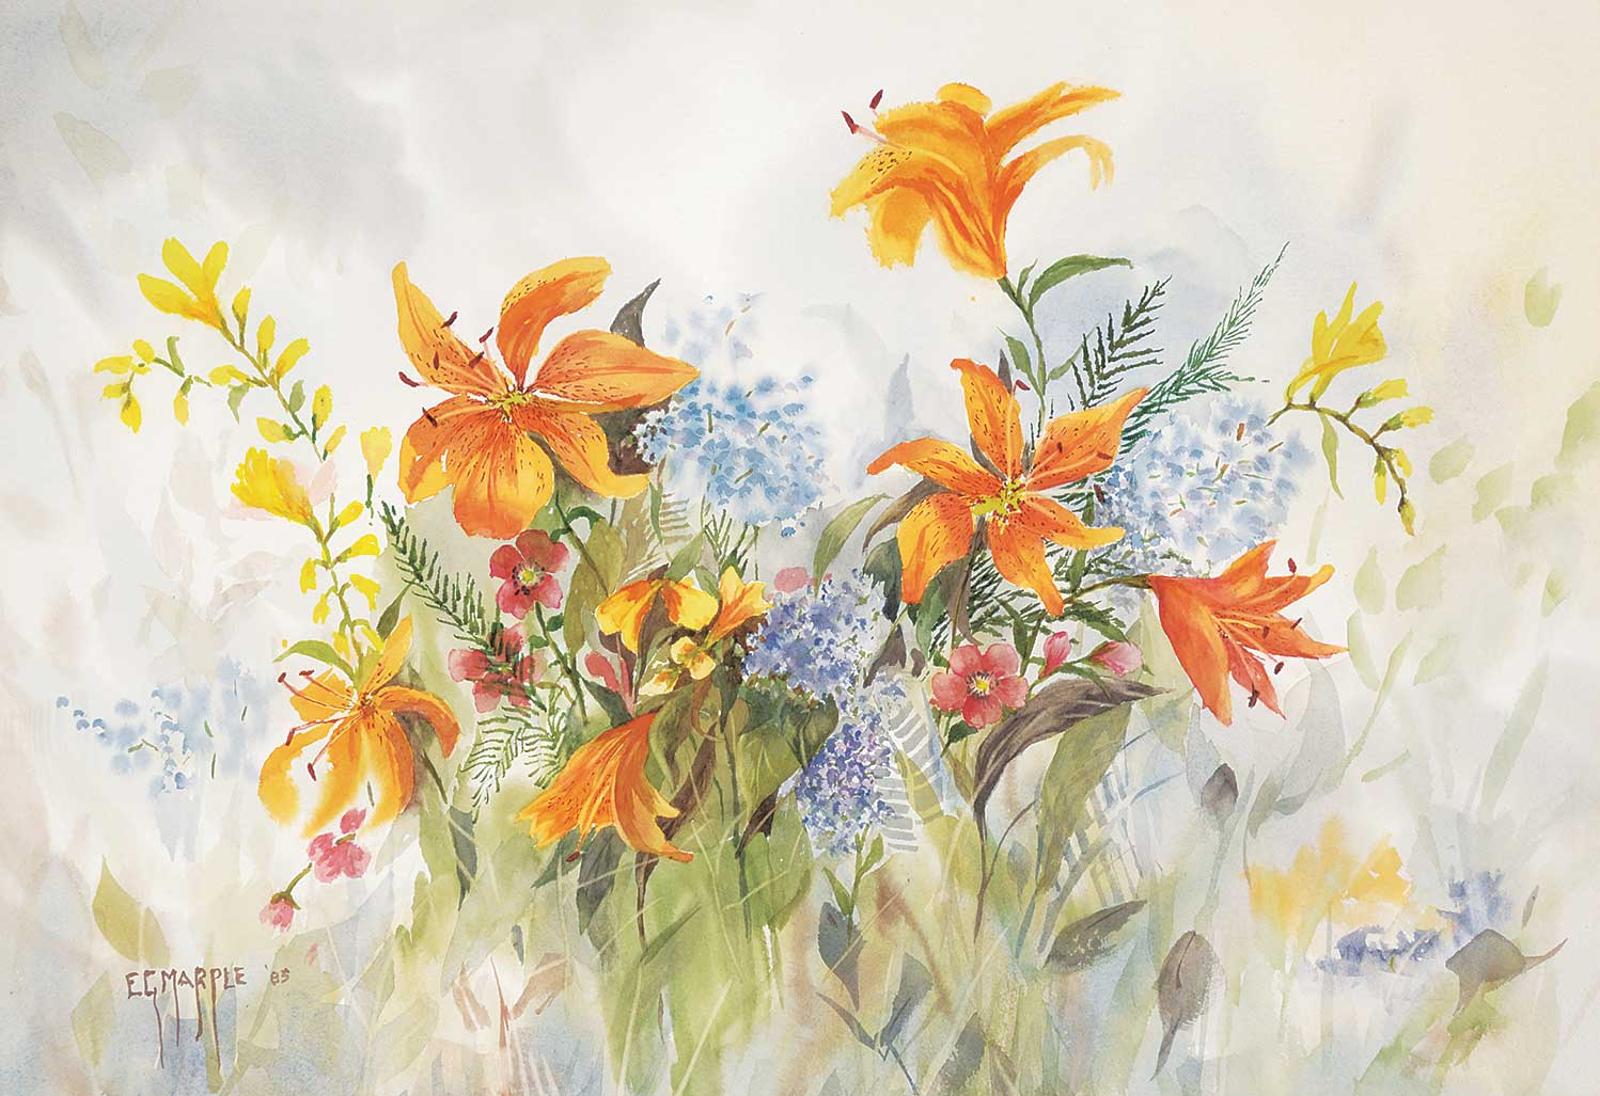 E.G. Marple - Untitled - Tiger Lilies